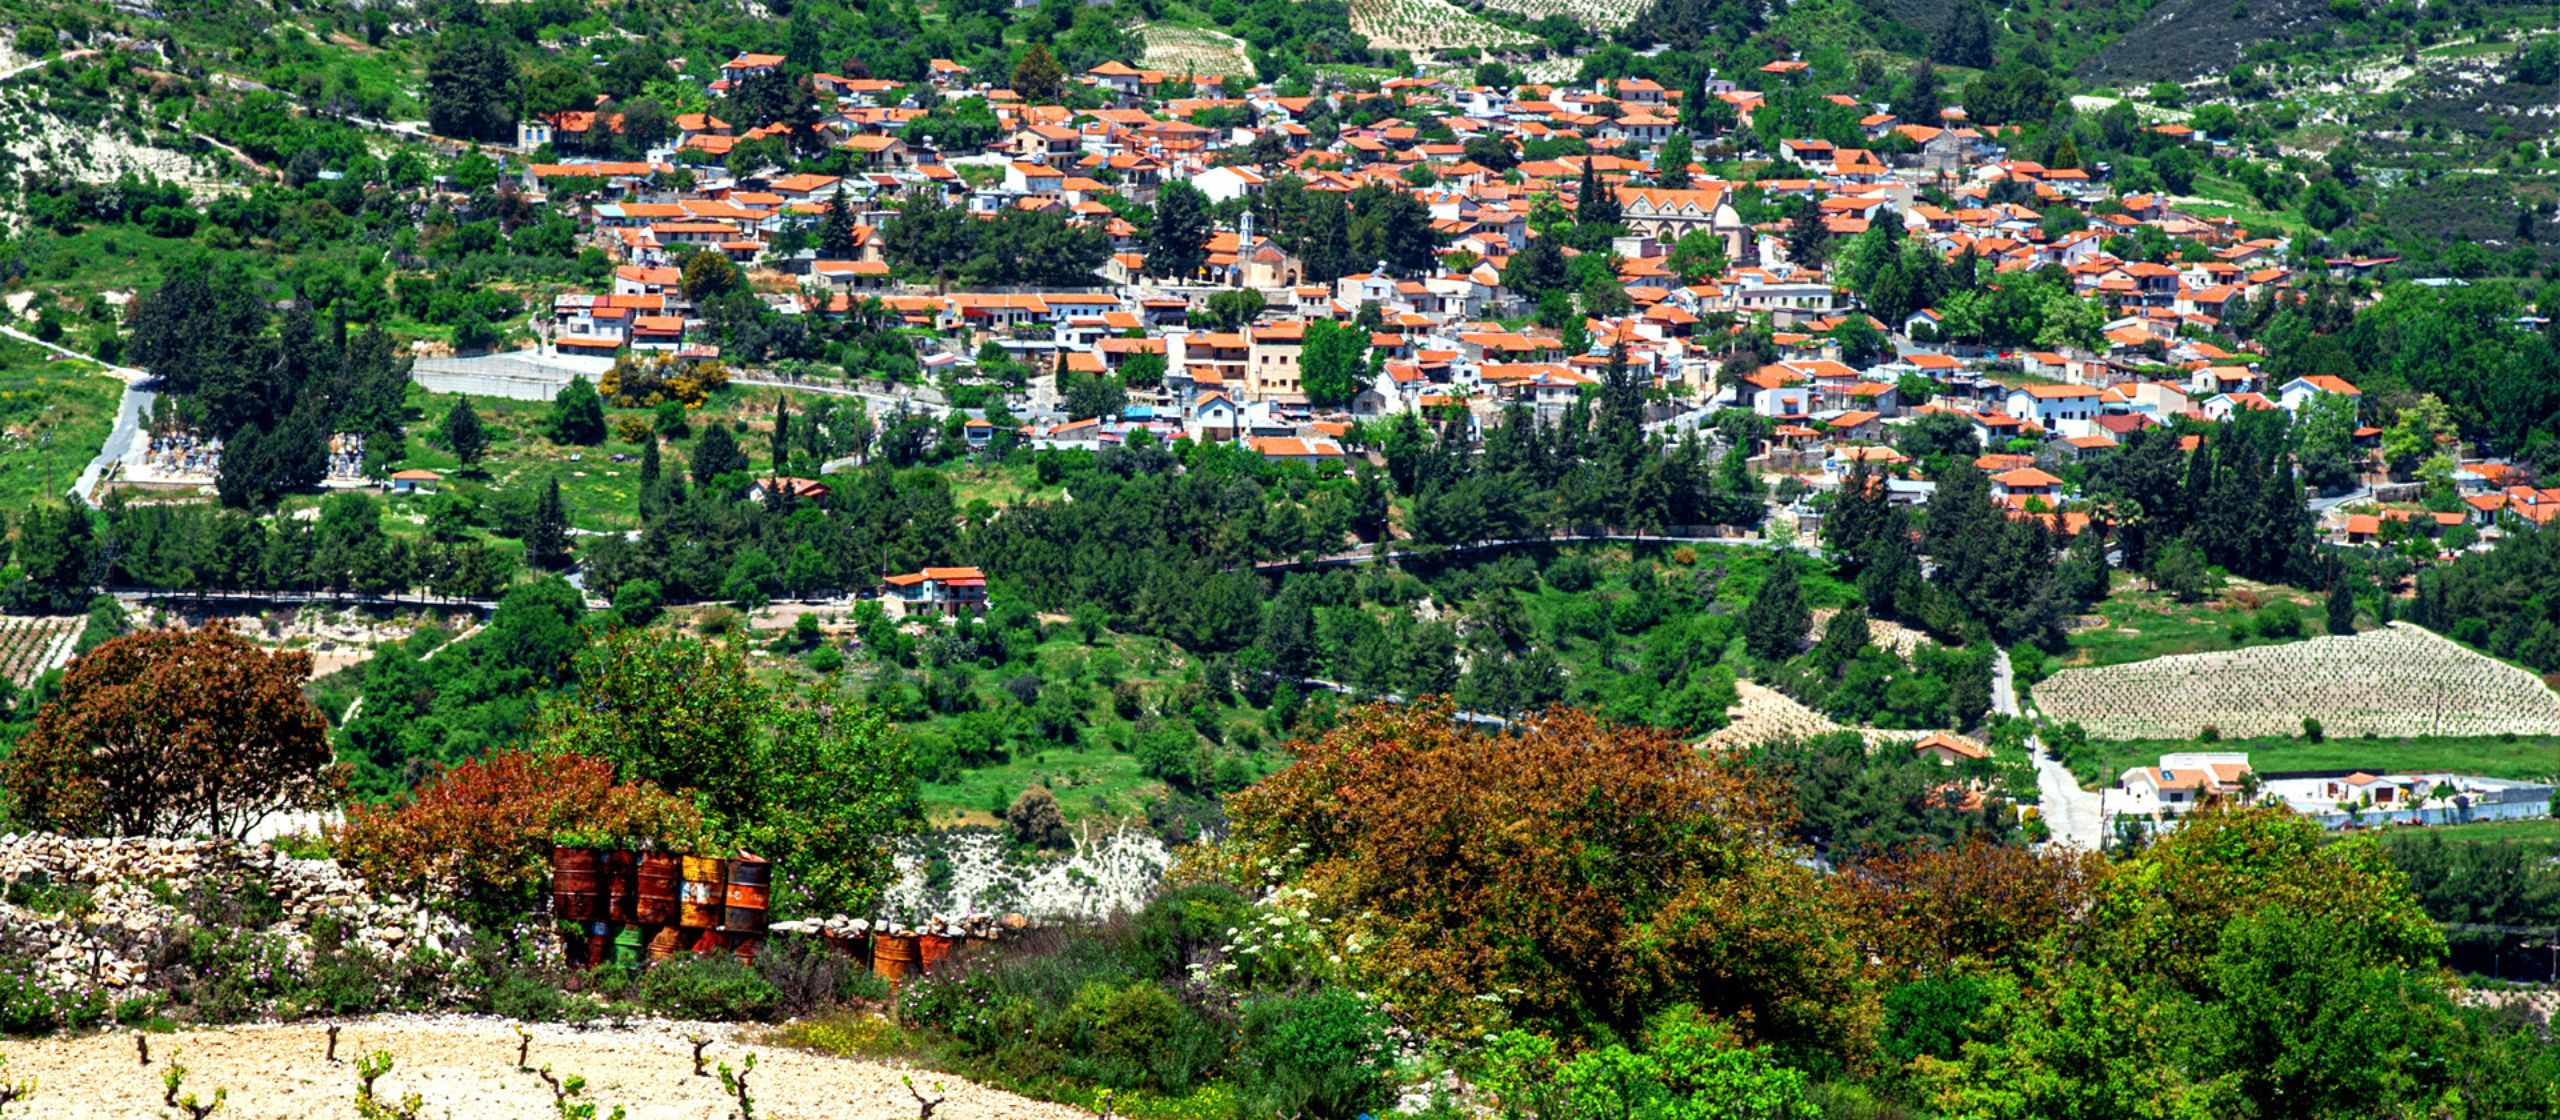 Koilani Village in Cyprus